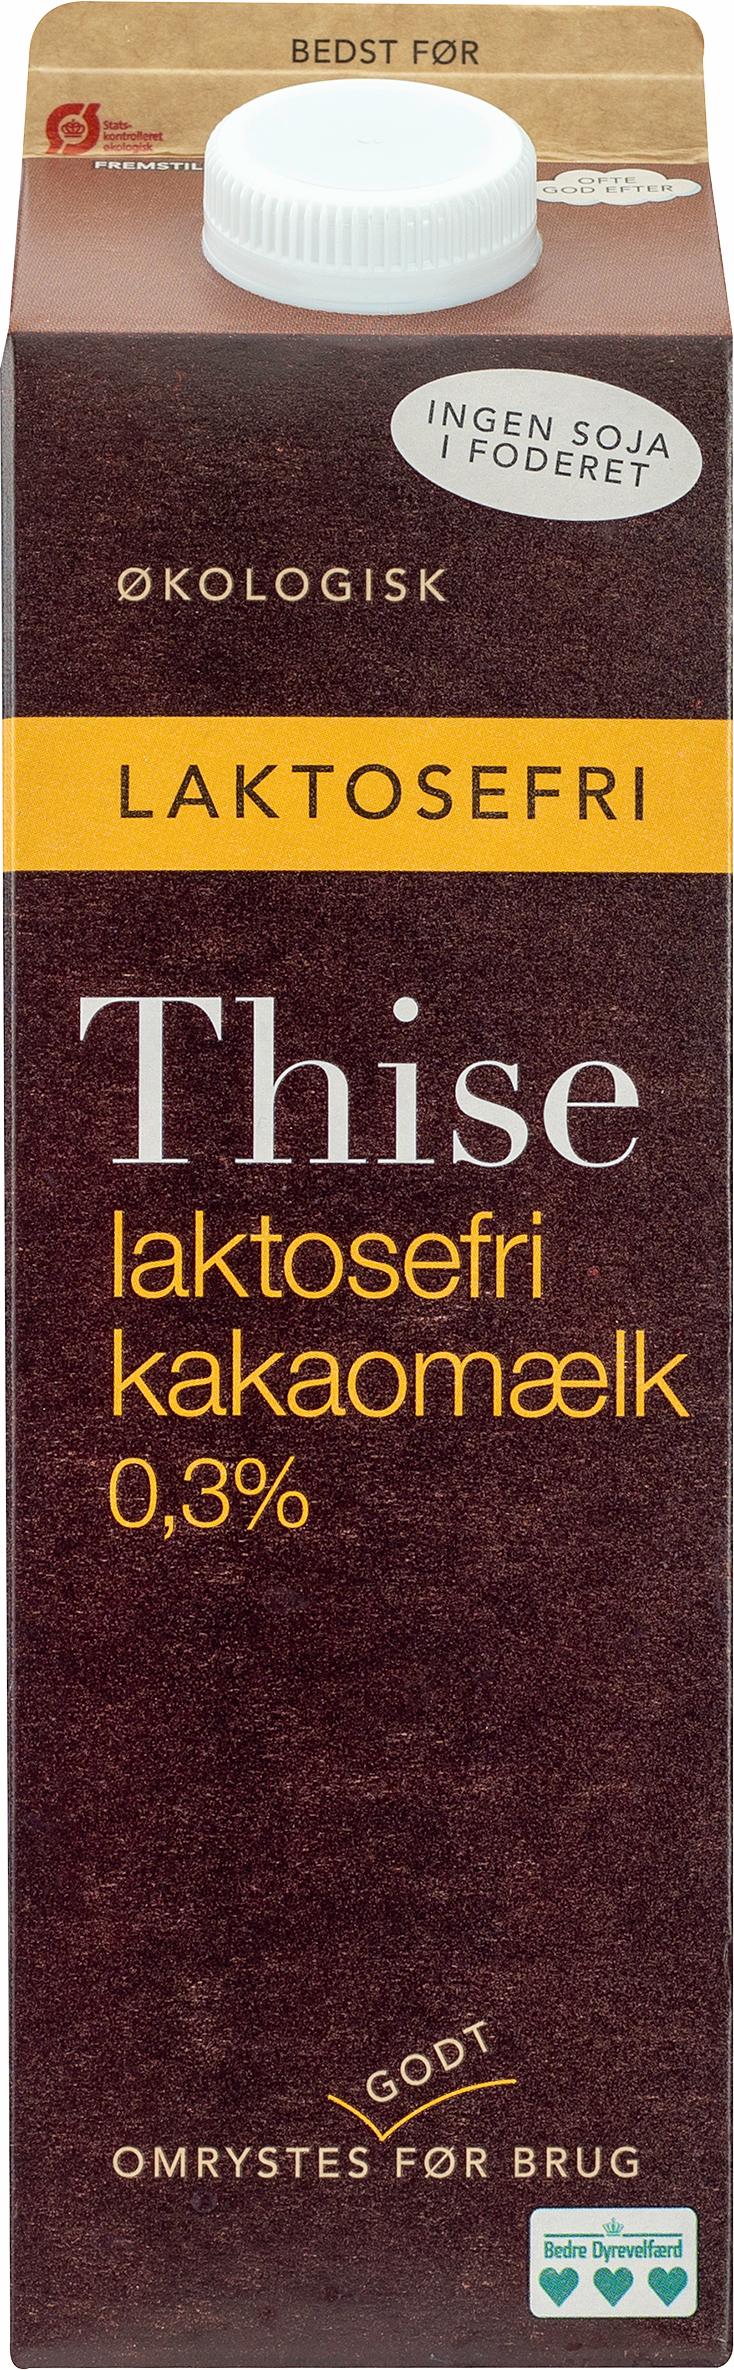 Thise Kakaomælk Laktosefri 0,3% 1L